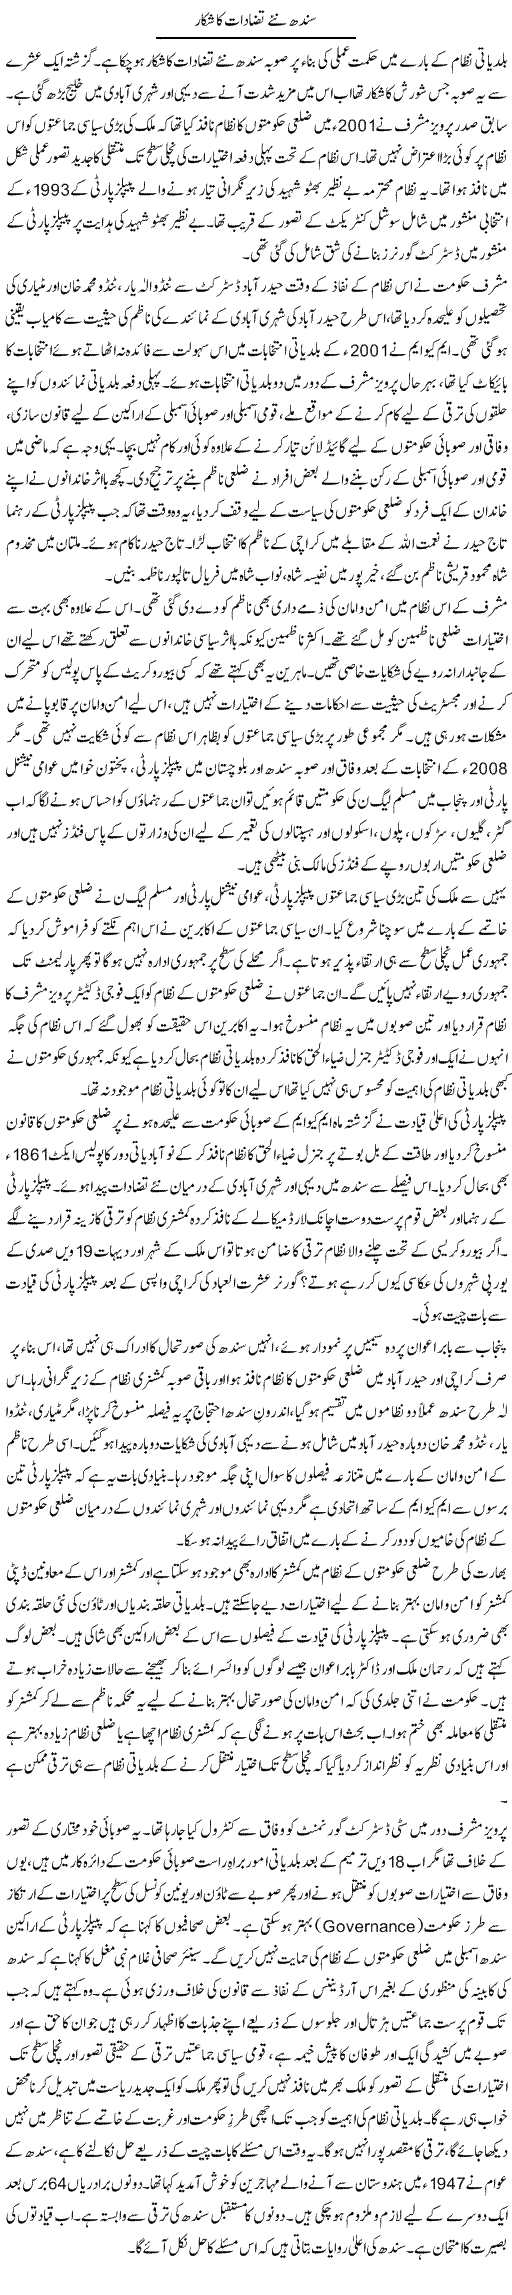 Sindh Problems Express Column Tauseef 13 August 2011